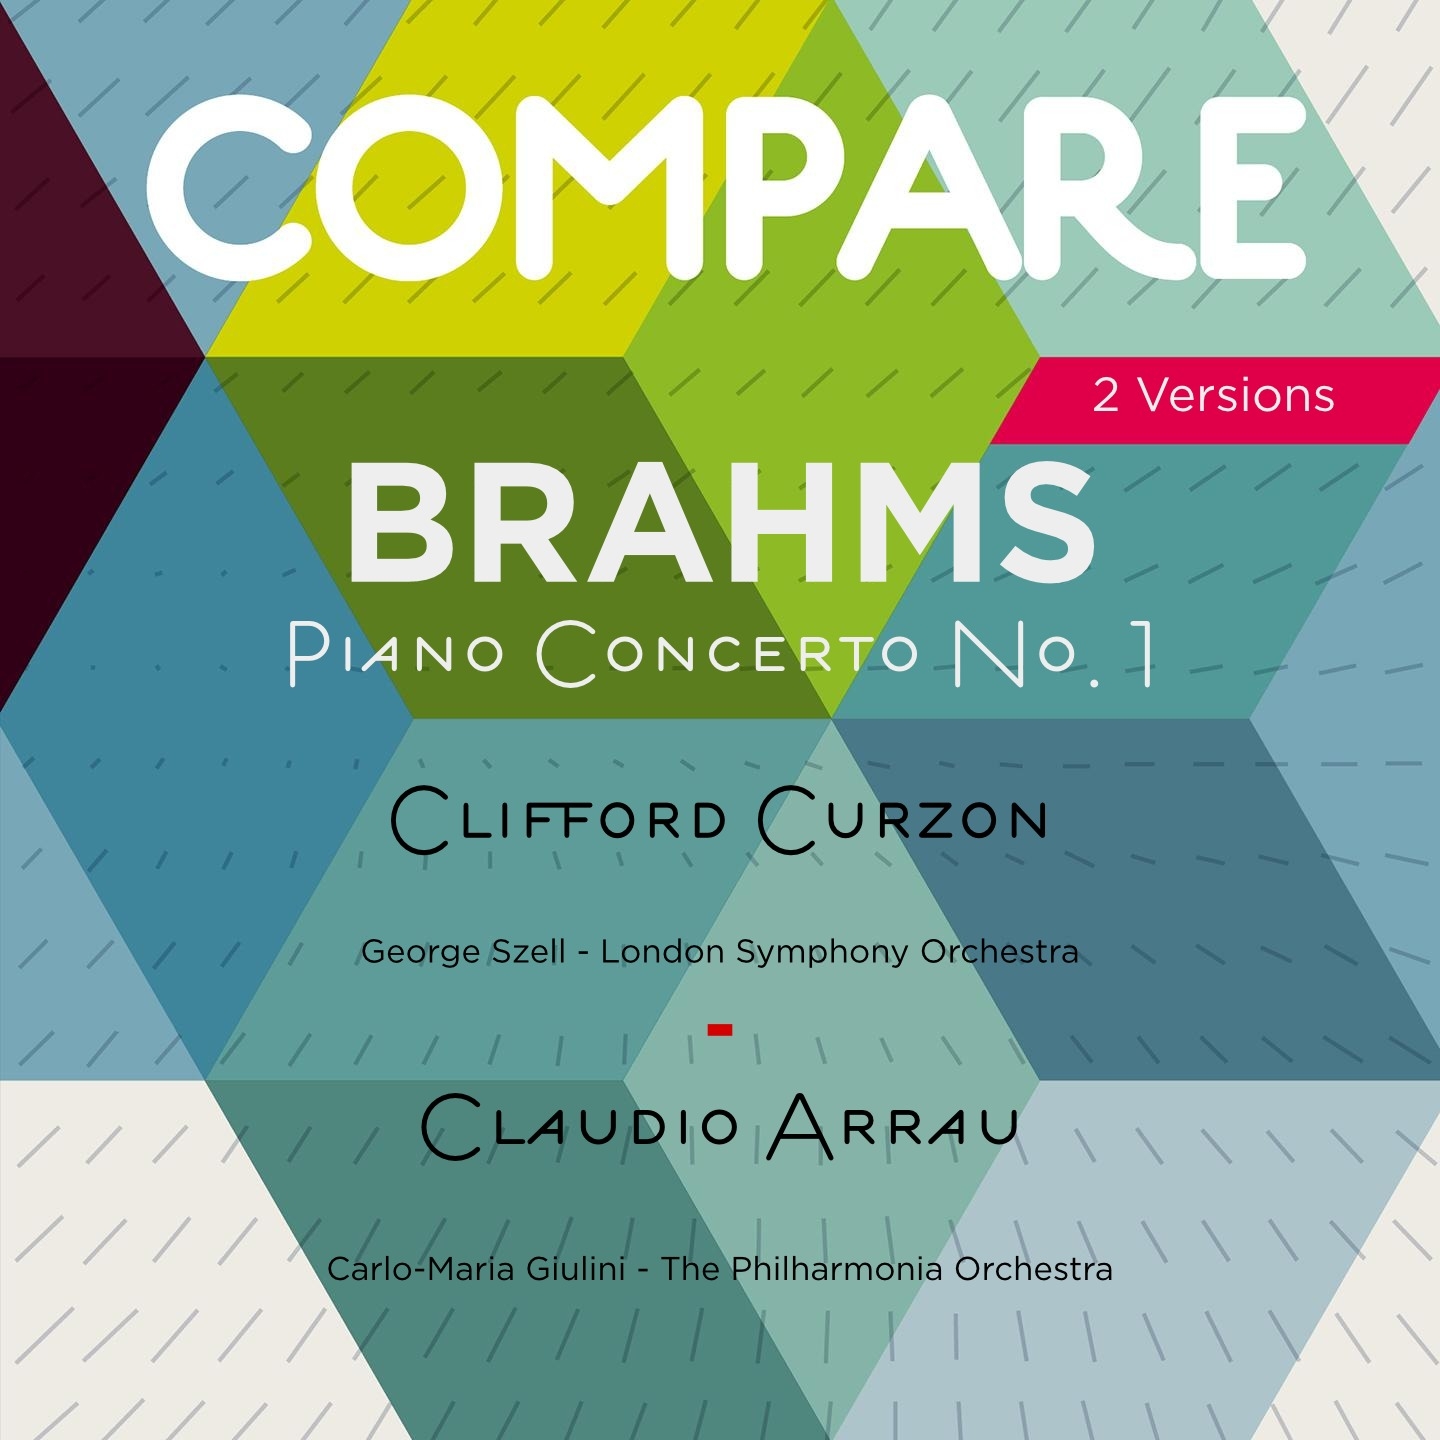 Brahms: Piano Concerto No. 1, Op. 15, Curzon vs. Arrau